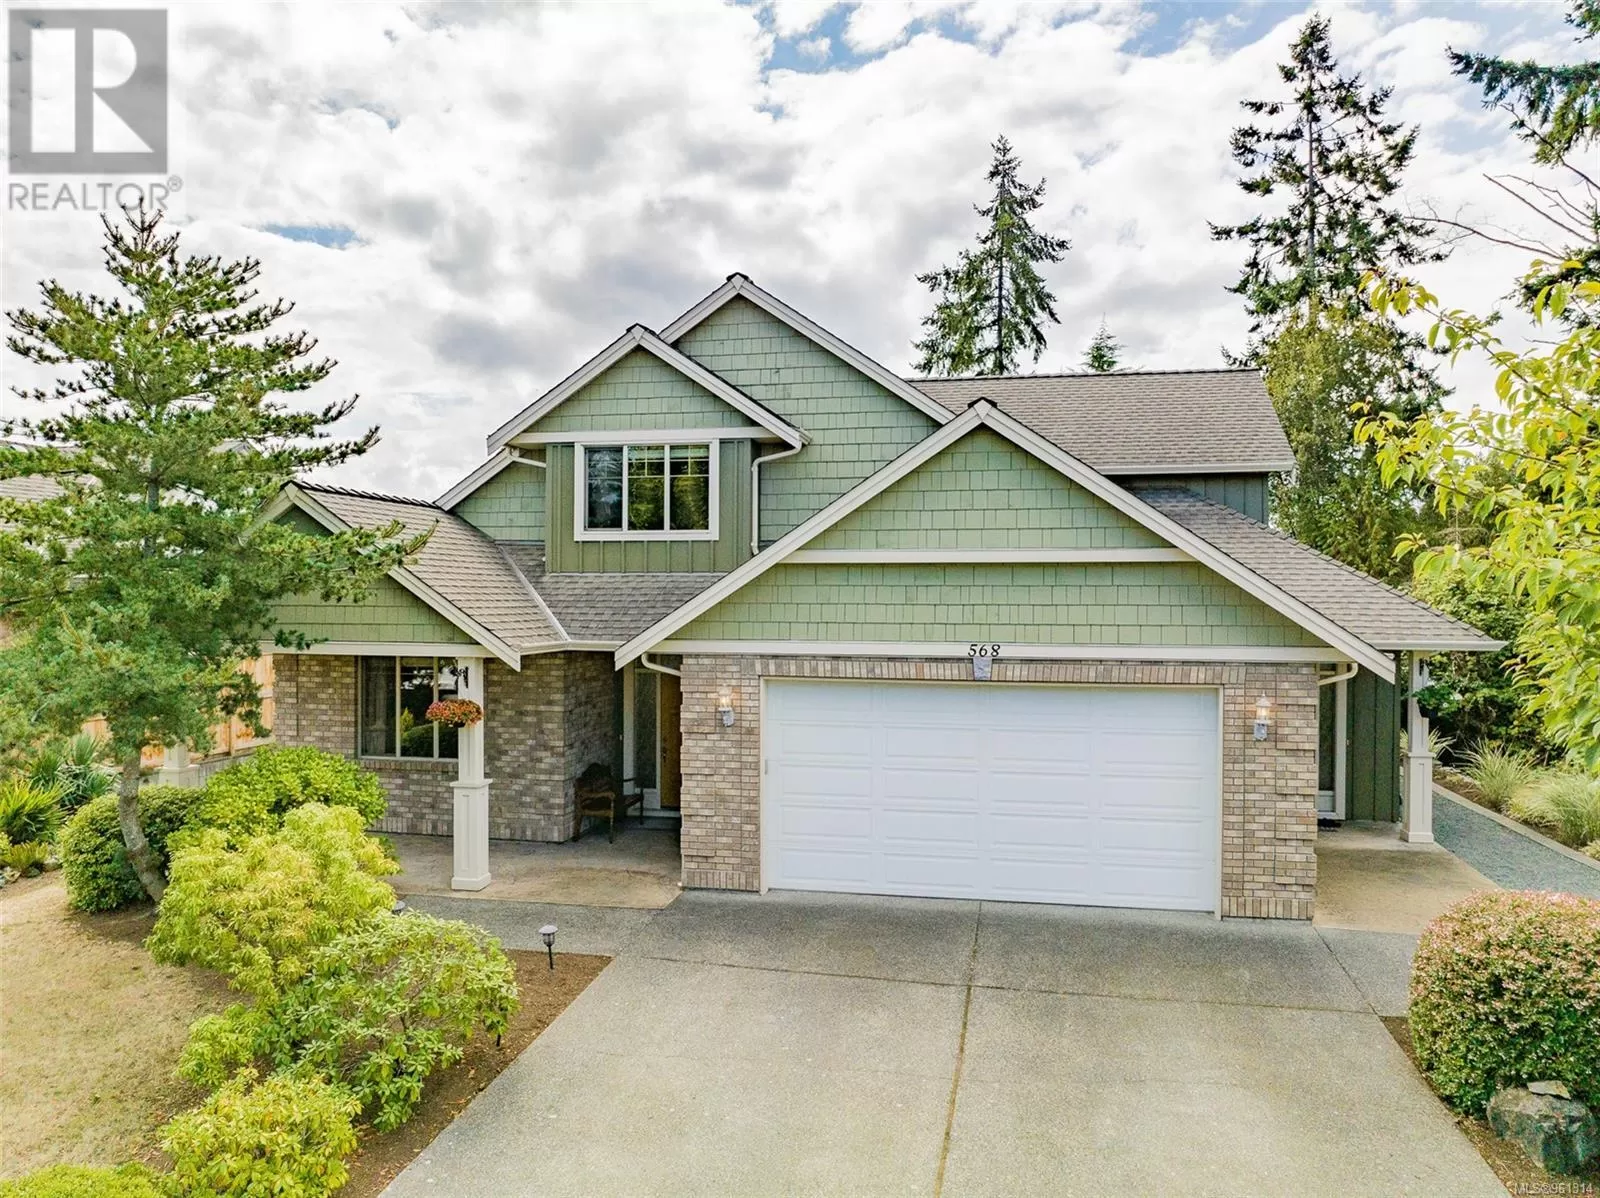 House for rent: 568 Soriel Rd, Parksville, British Columbia V9P 2Z7